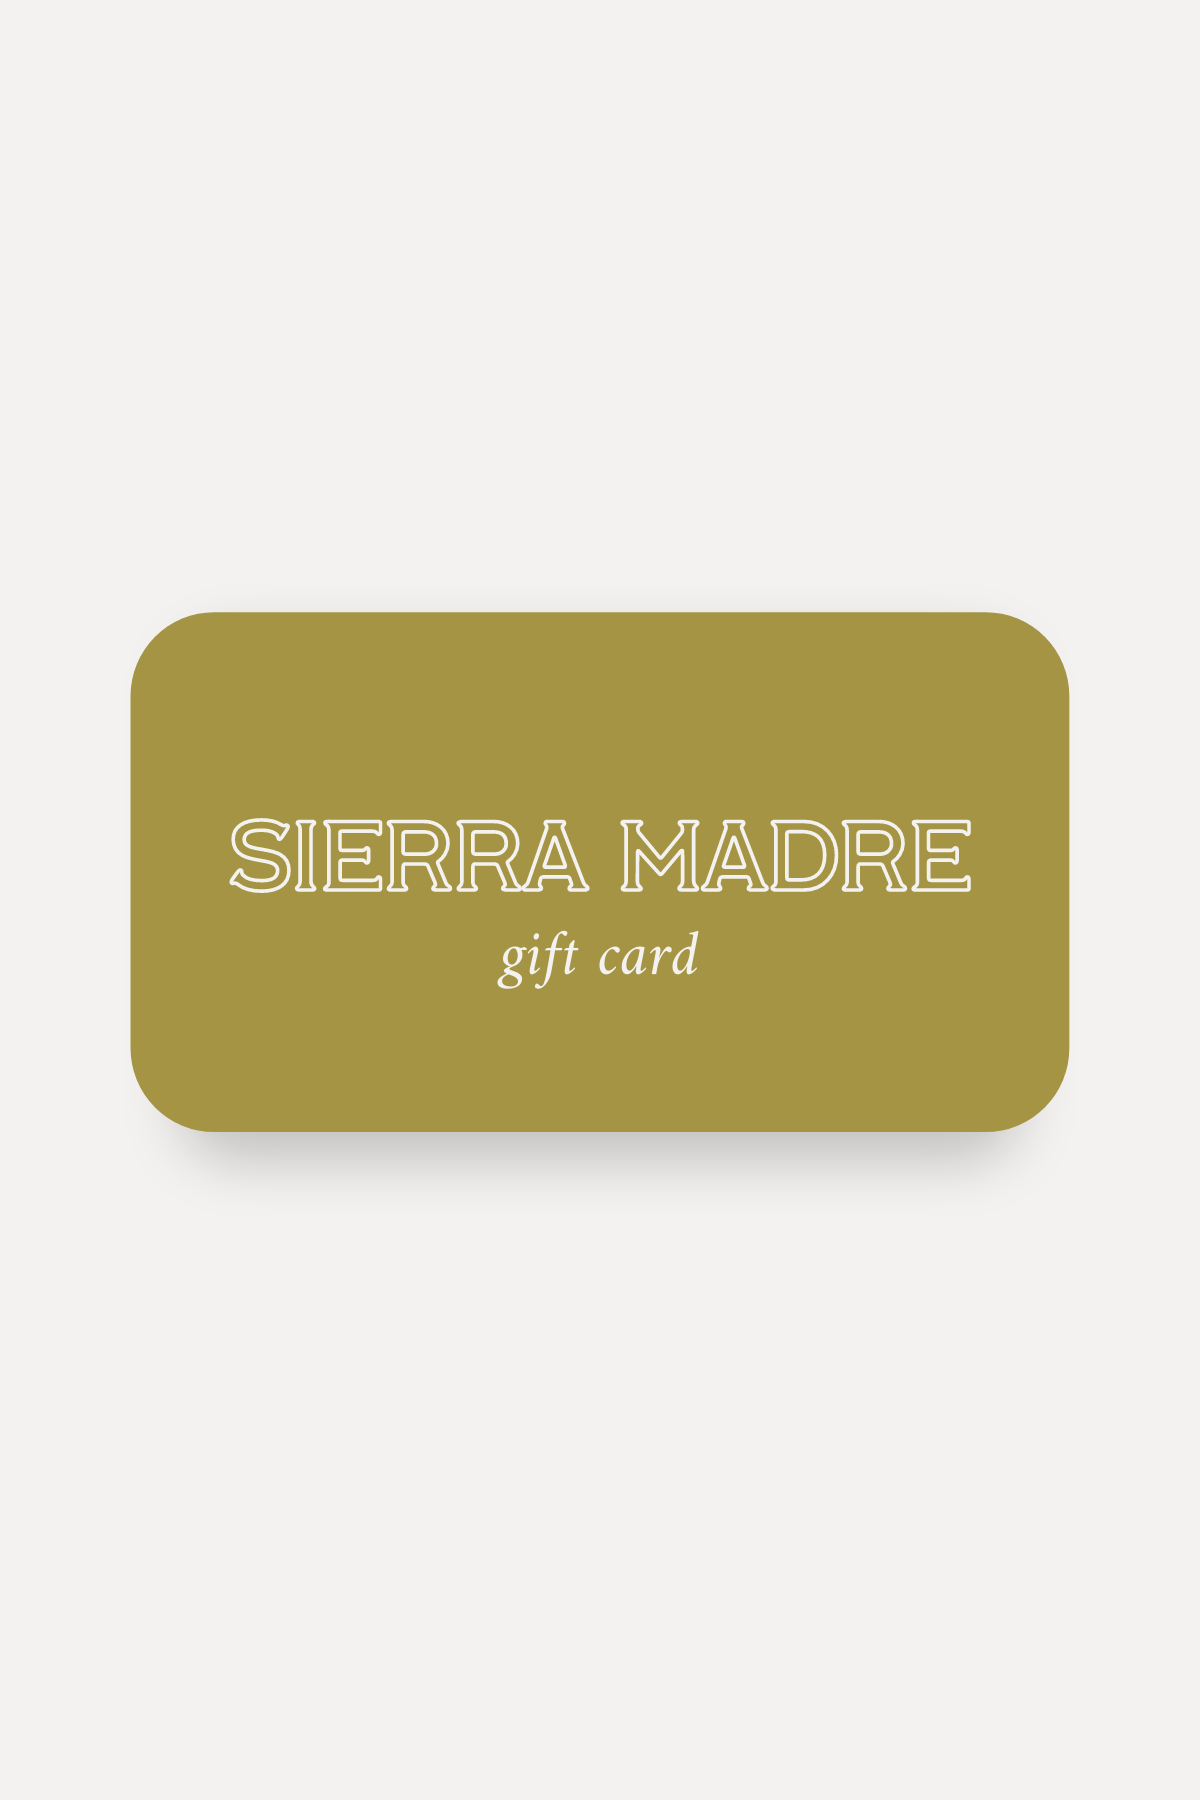 Sierra Madre Gift Card – Sierra Madre Golf